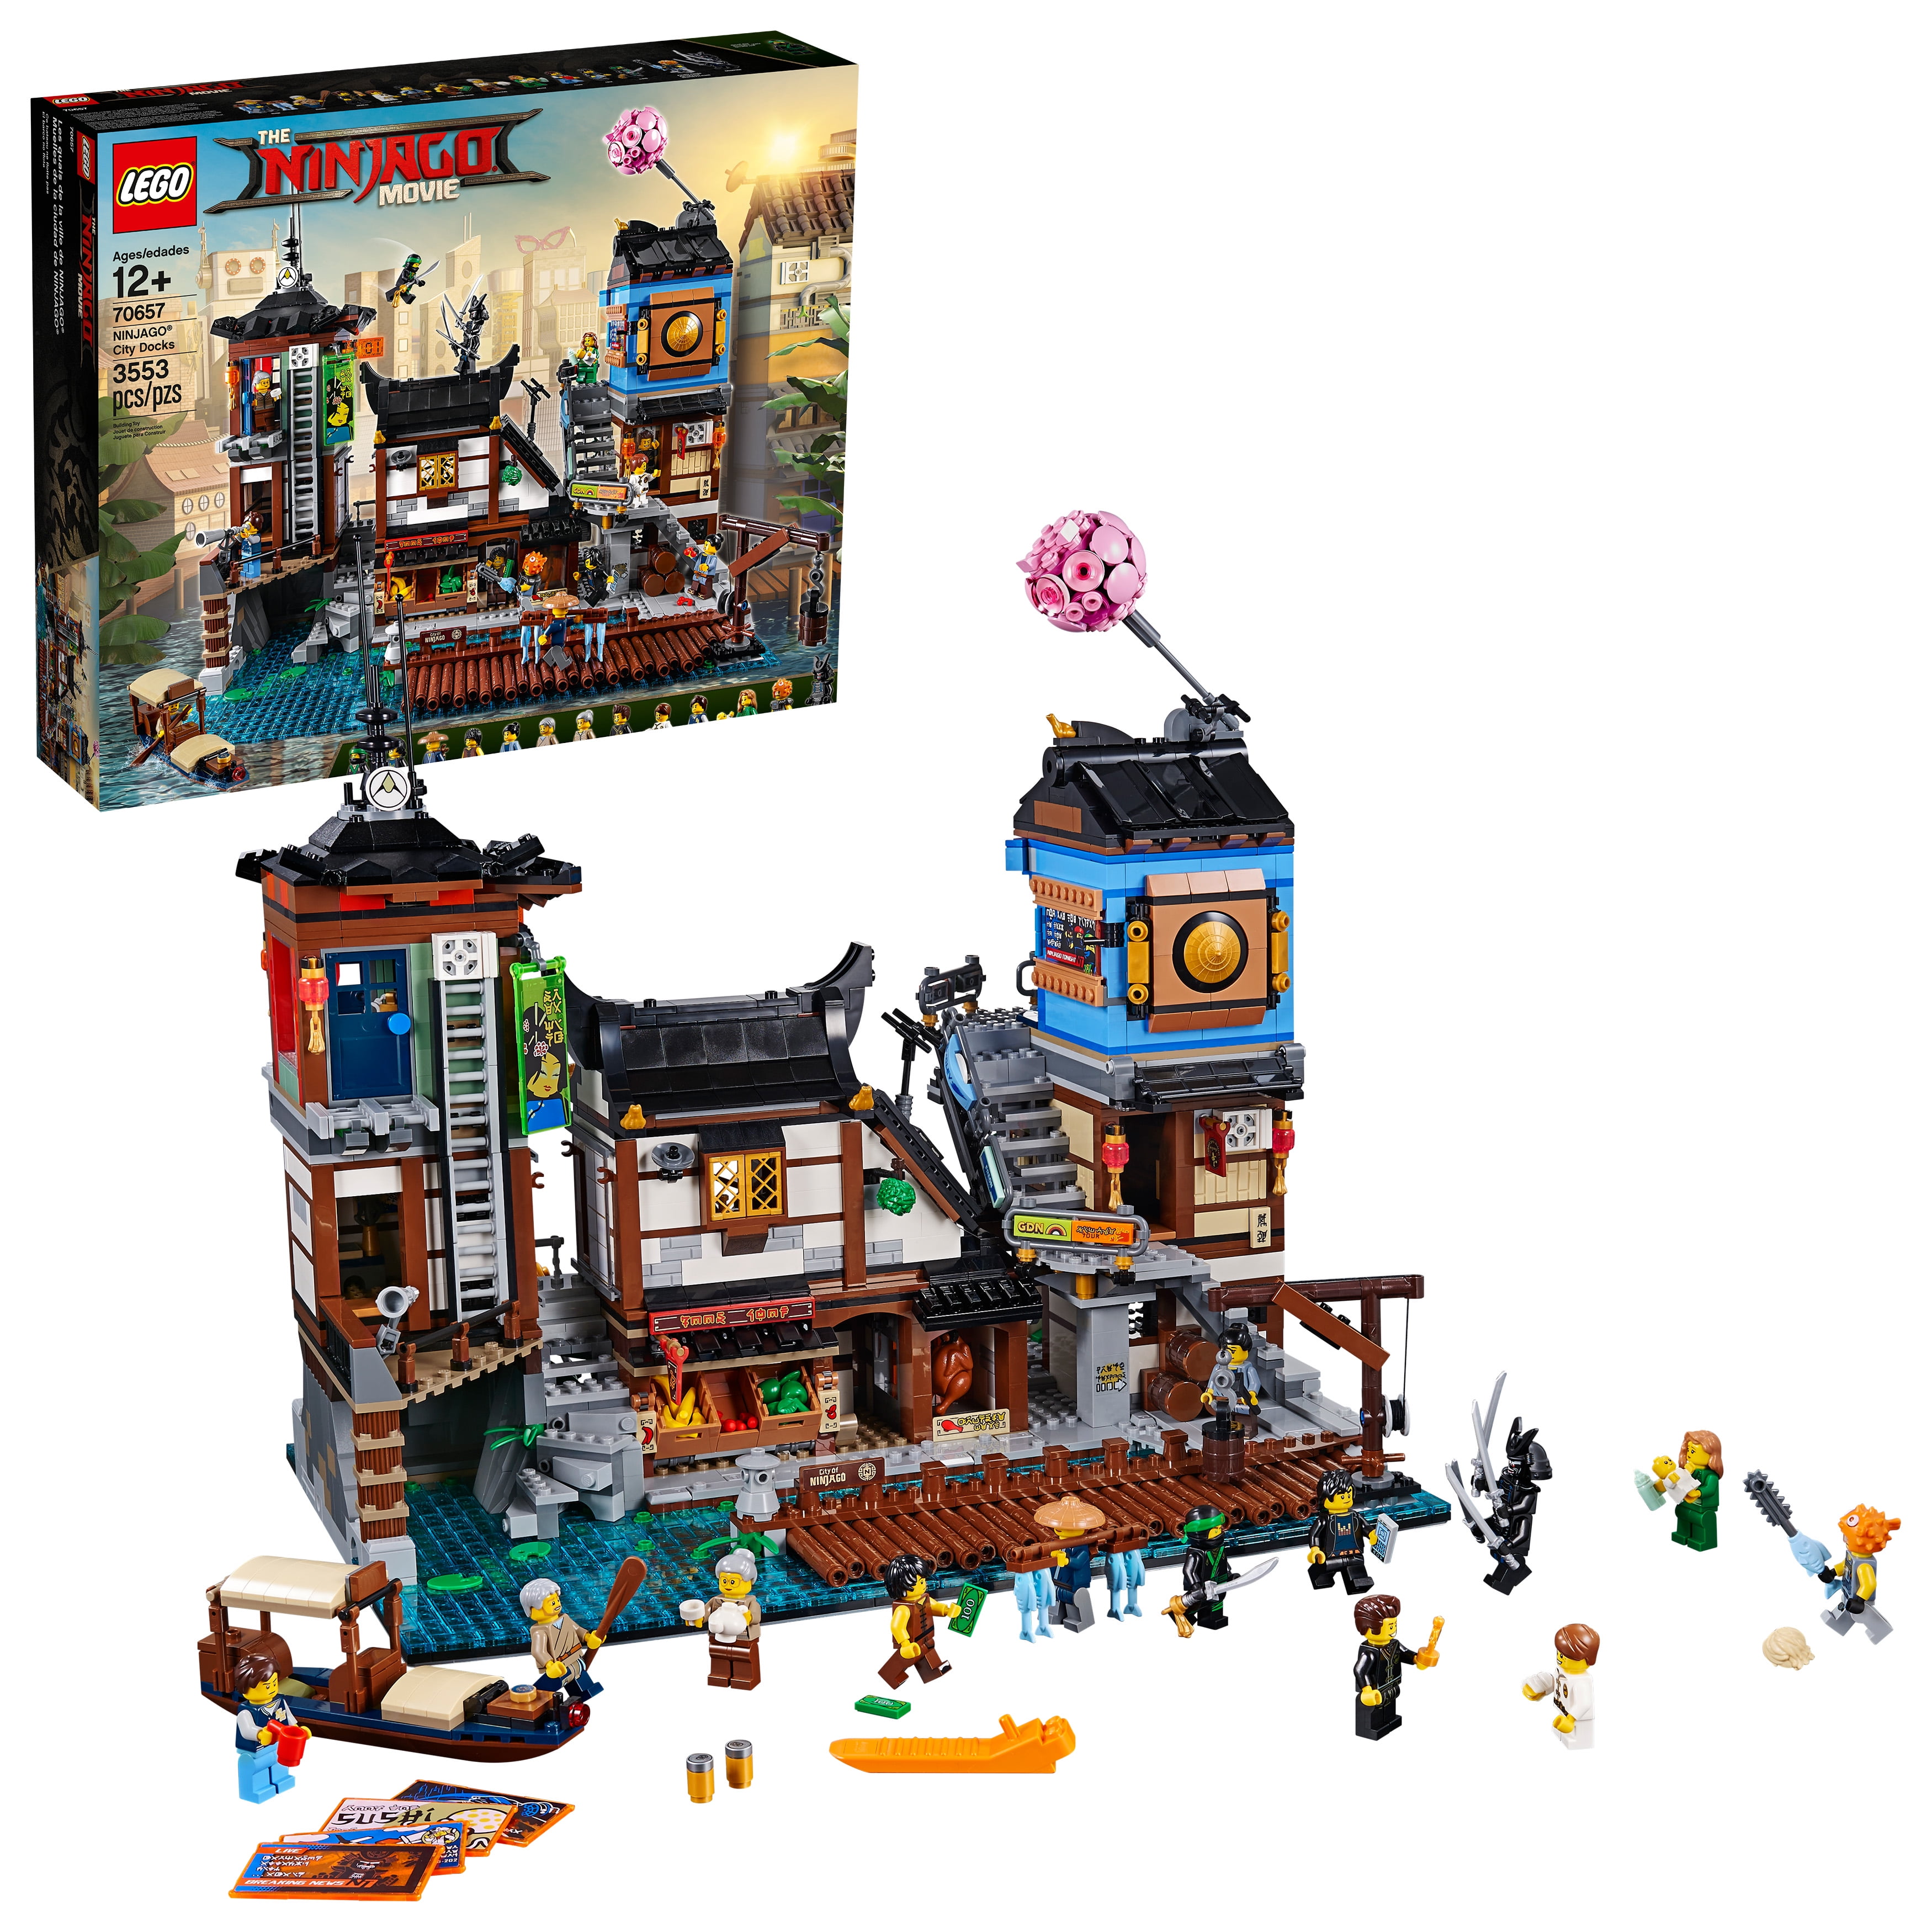 Details about   Building Blocks Sets 06098 Ninjago Monastery Of Spinjitzu Model Toys 80018 